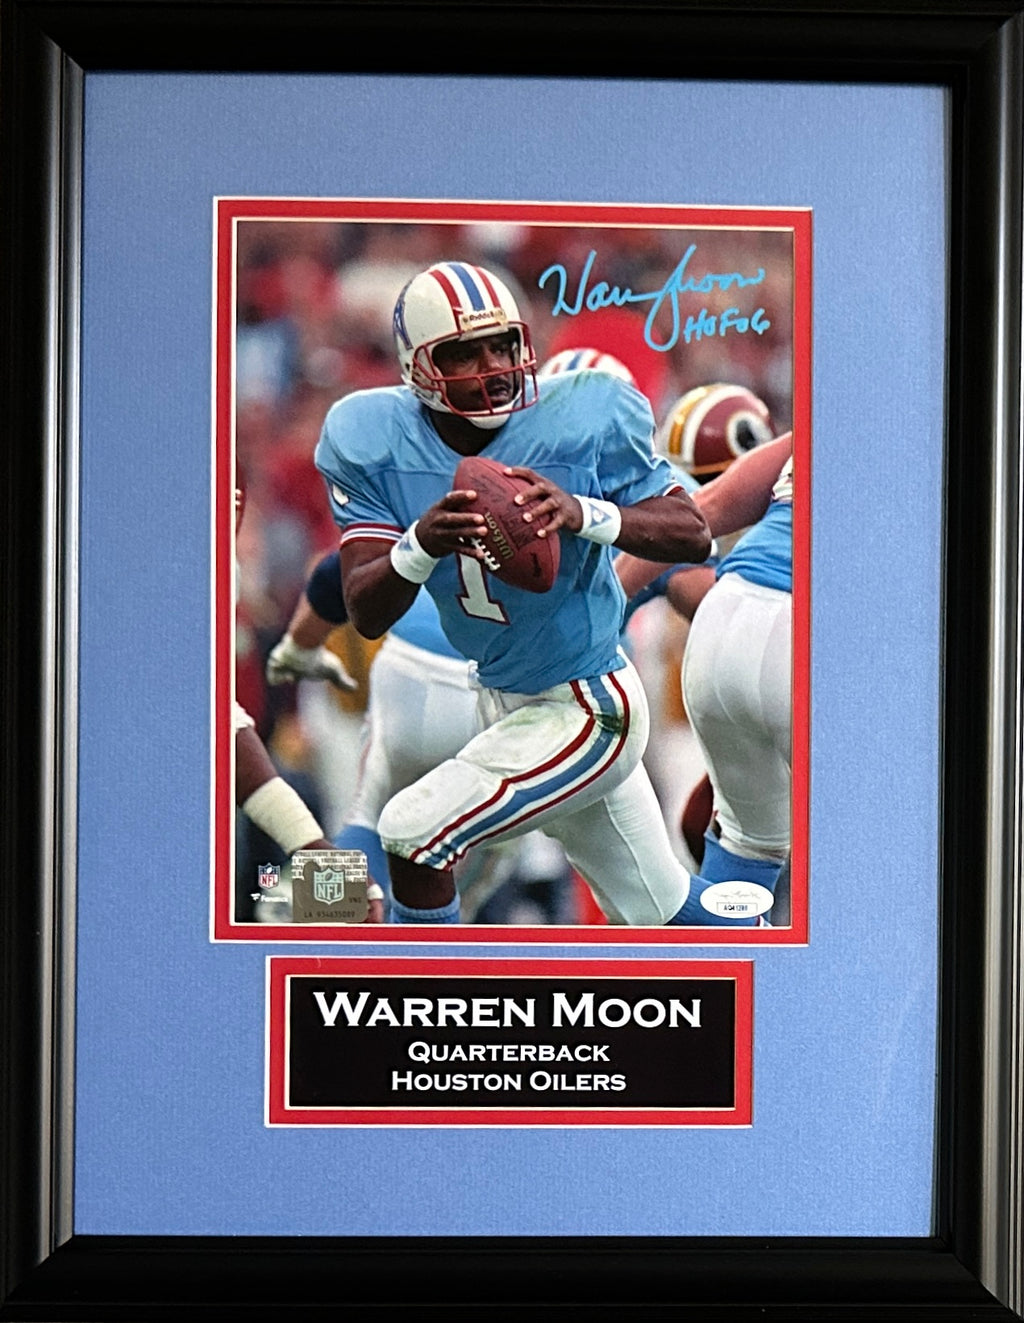 Warren Moon signed inscribed framed 8x10 photo NFL Houston Oilers JSA COA